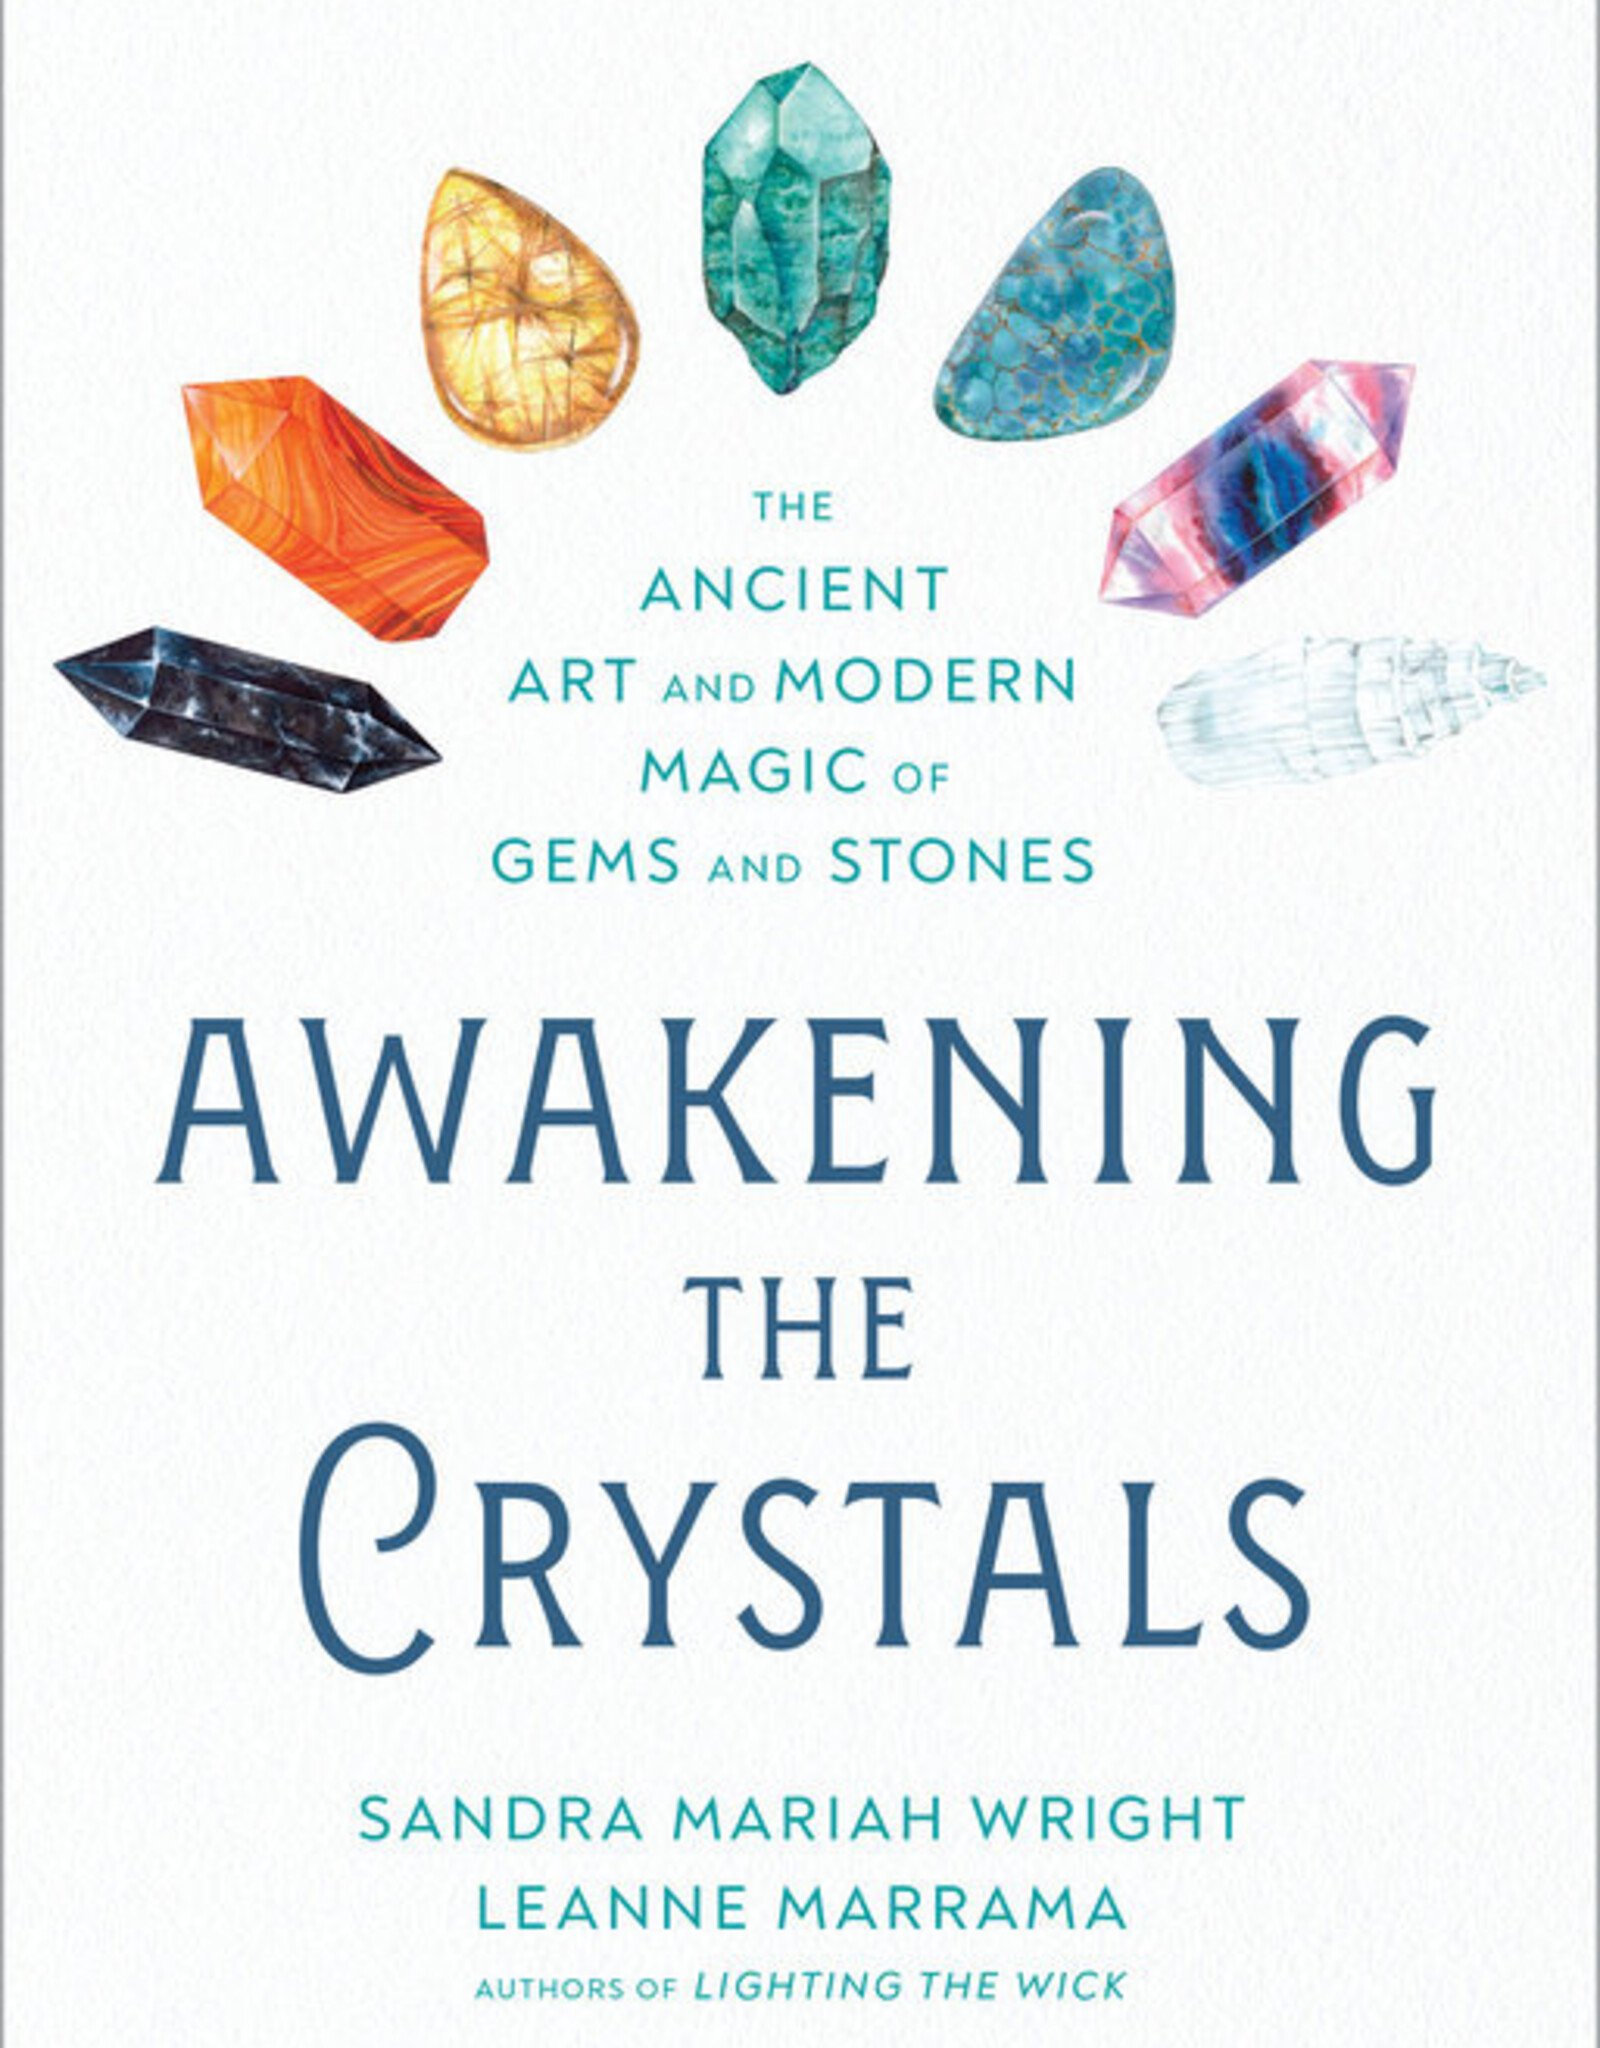 Penguin Random House Awakening the Crystals